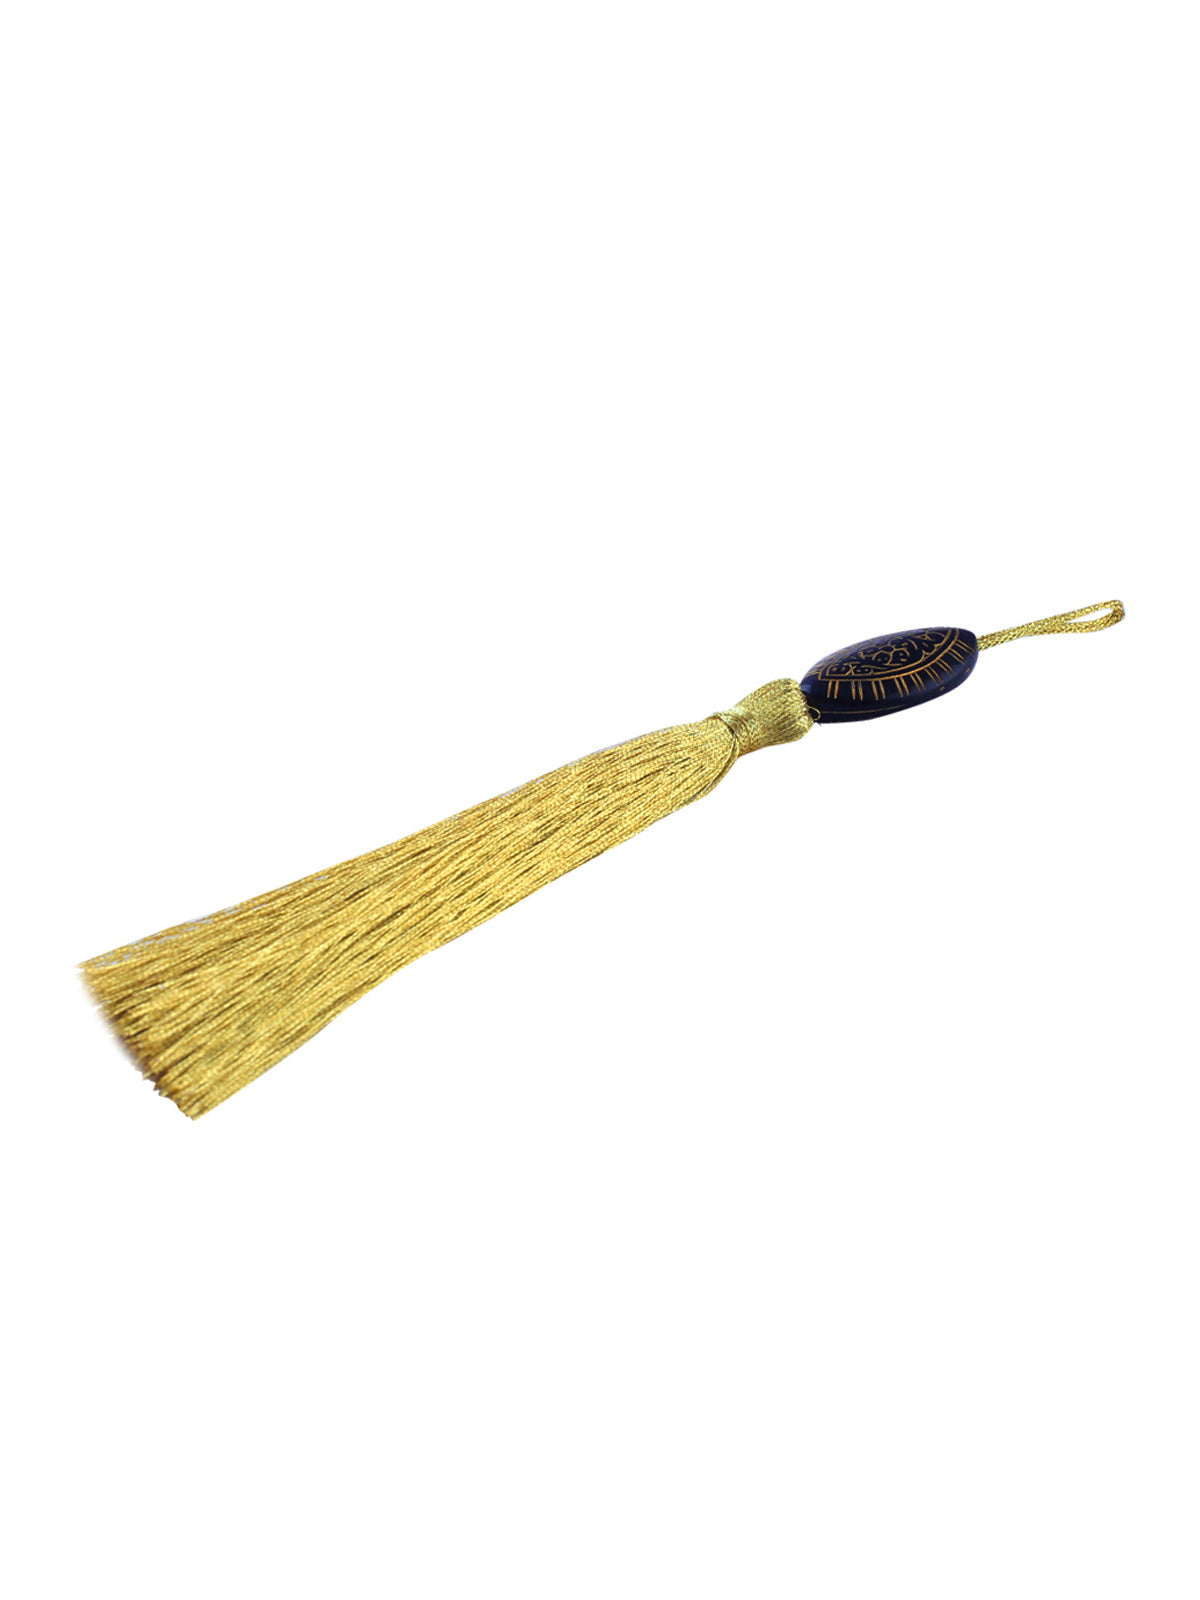 Pair of Shiny Metallic Bright Golden Decorative Thread Tassel